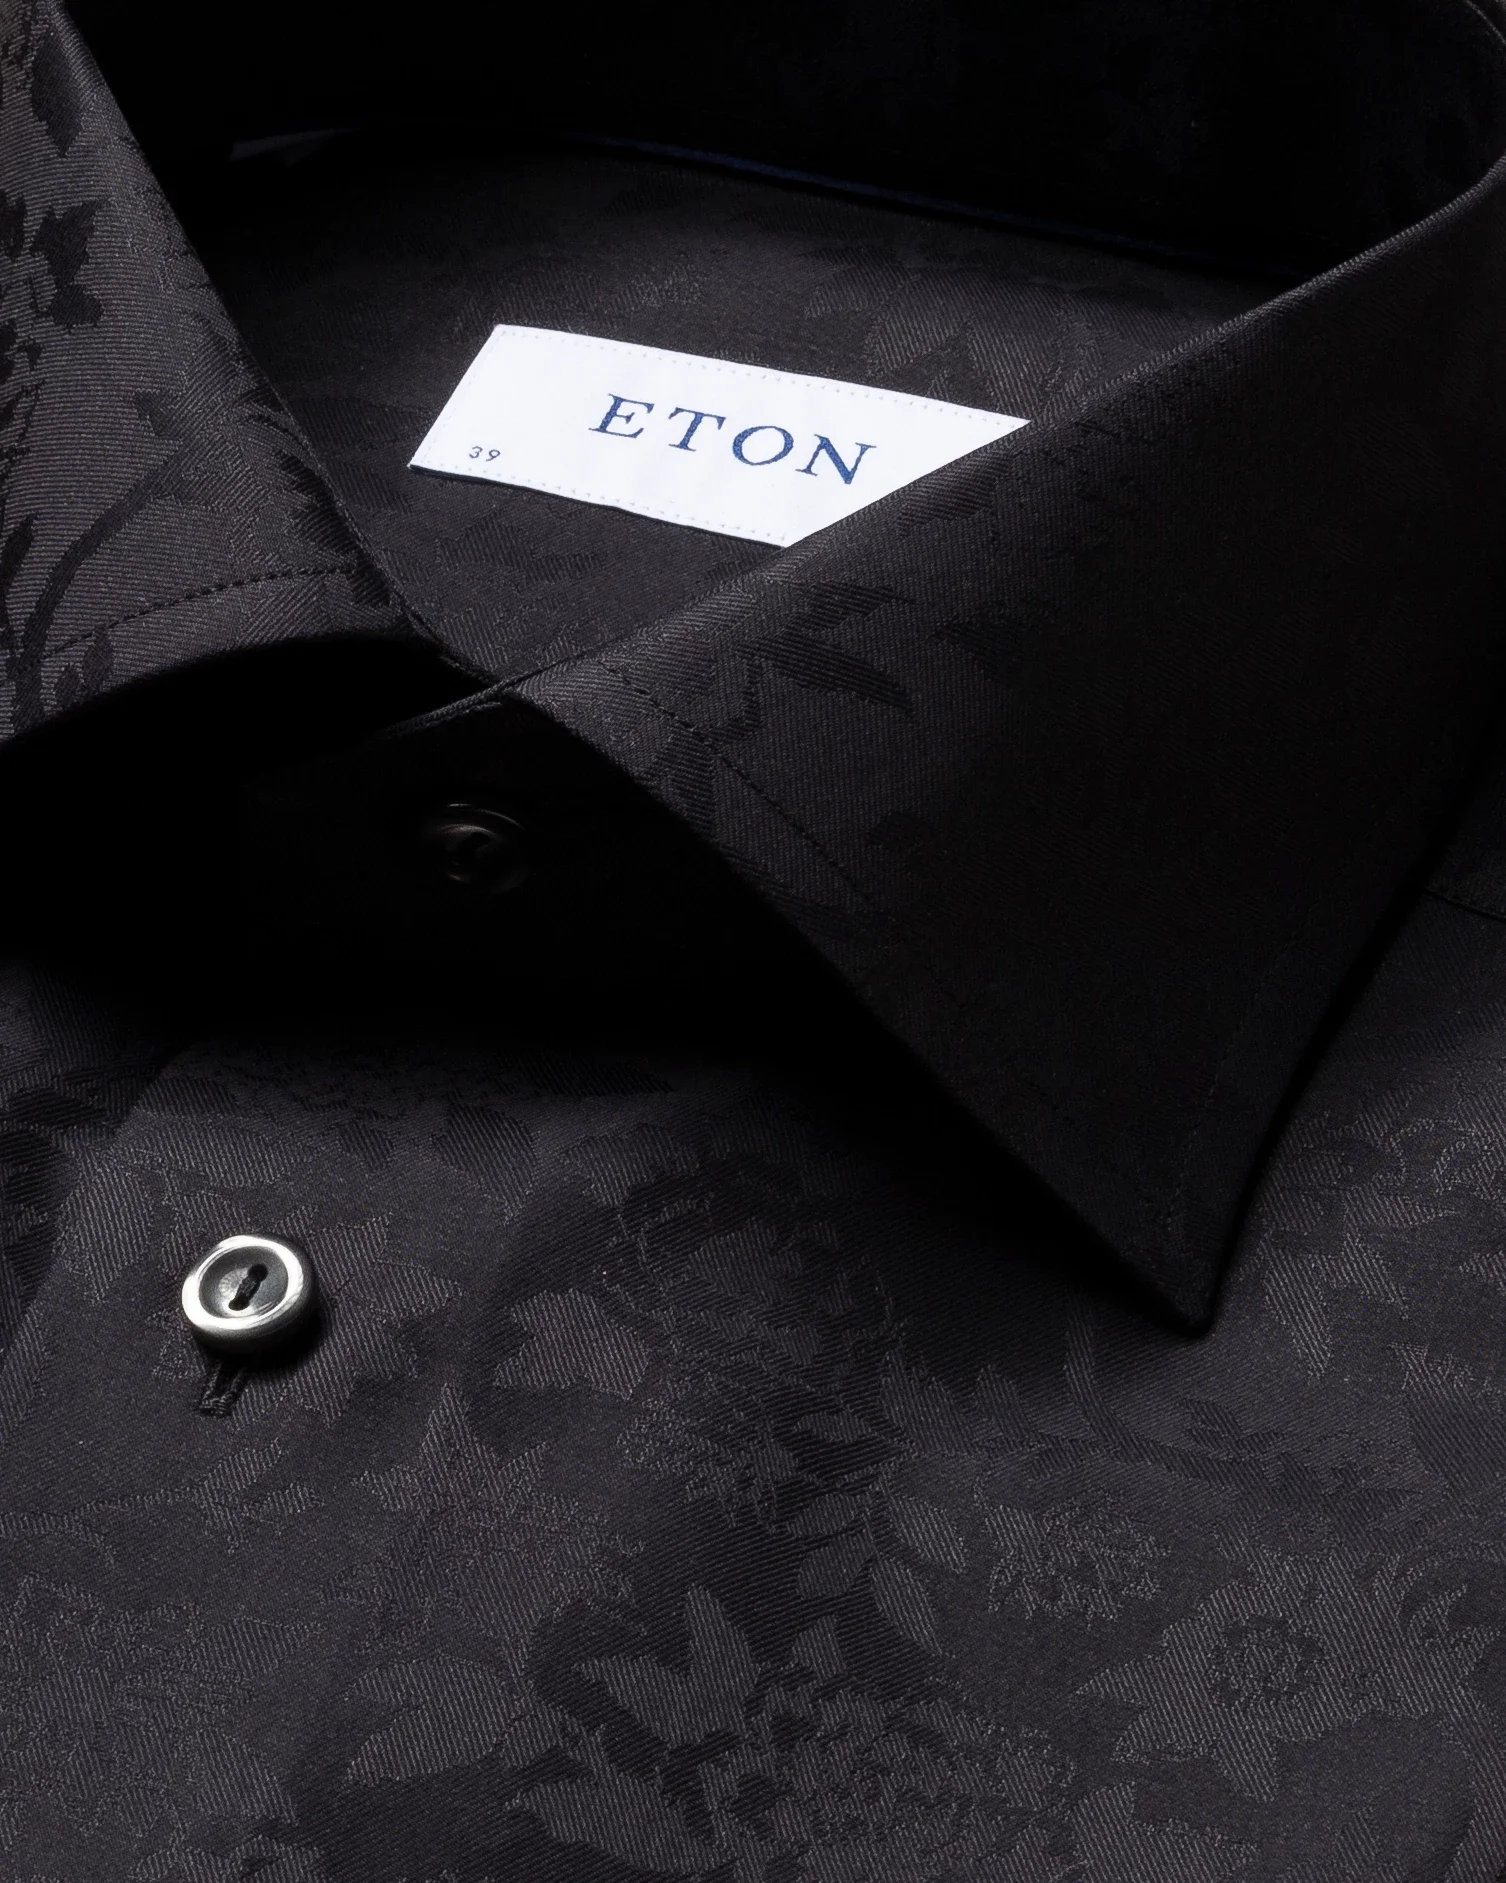 Eton - black floral jacquard shirt cut away single